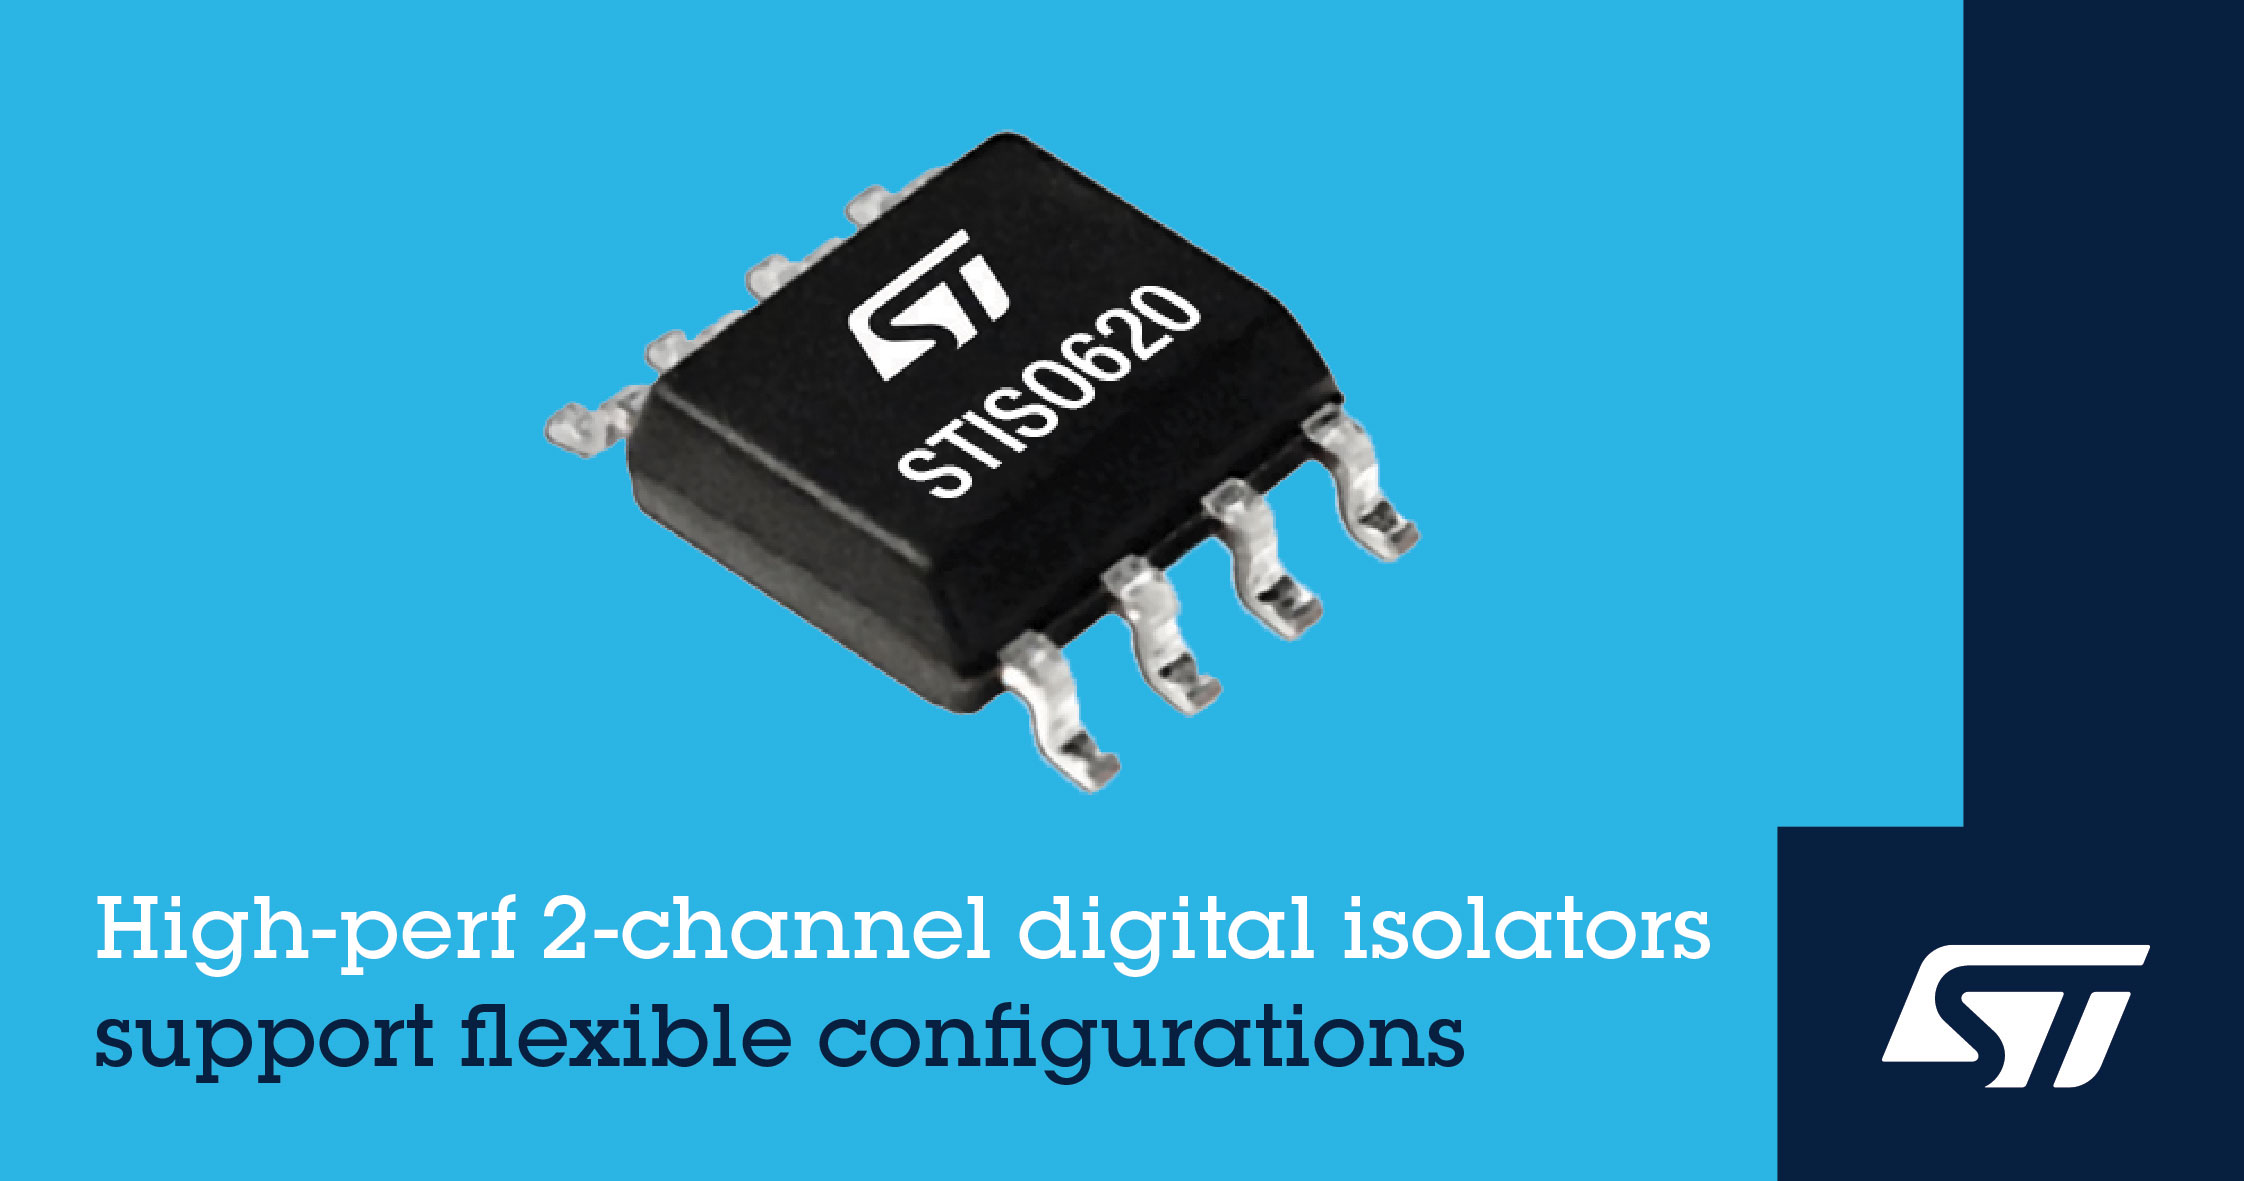 Dual-Channel Digital Isolators Cover Flexible Configurations